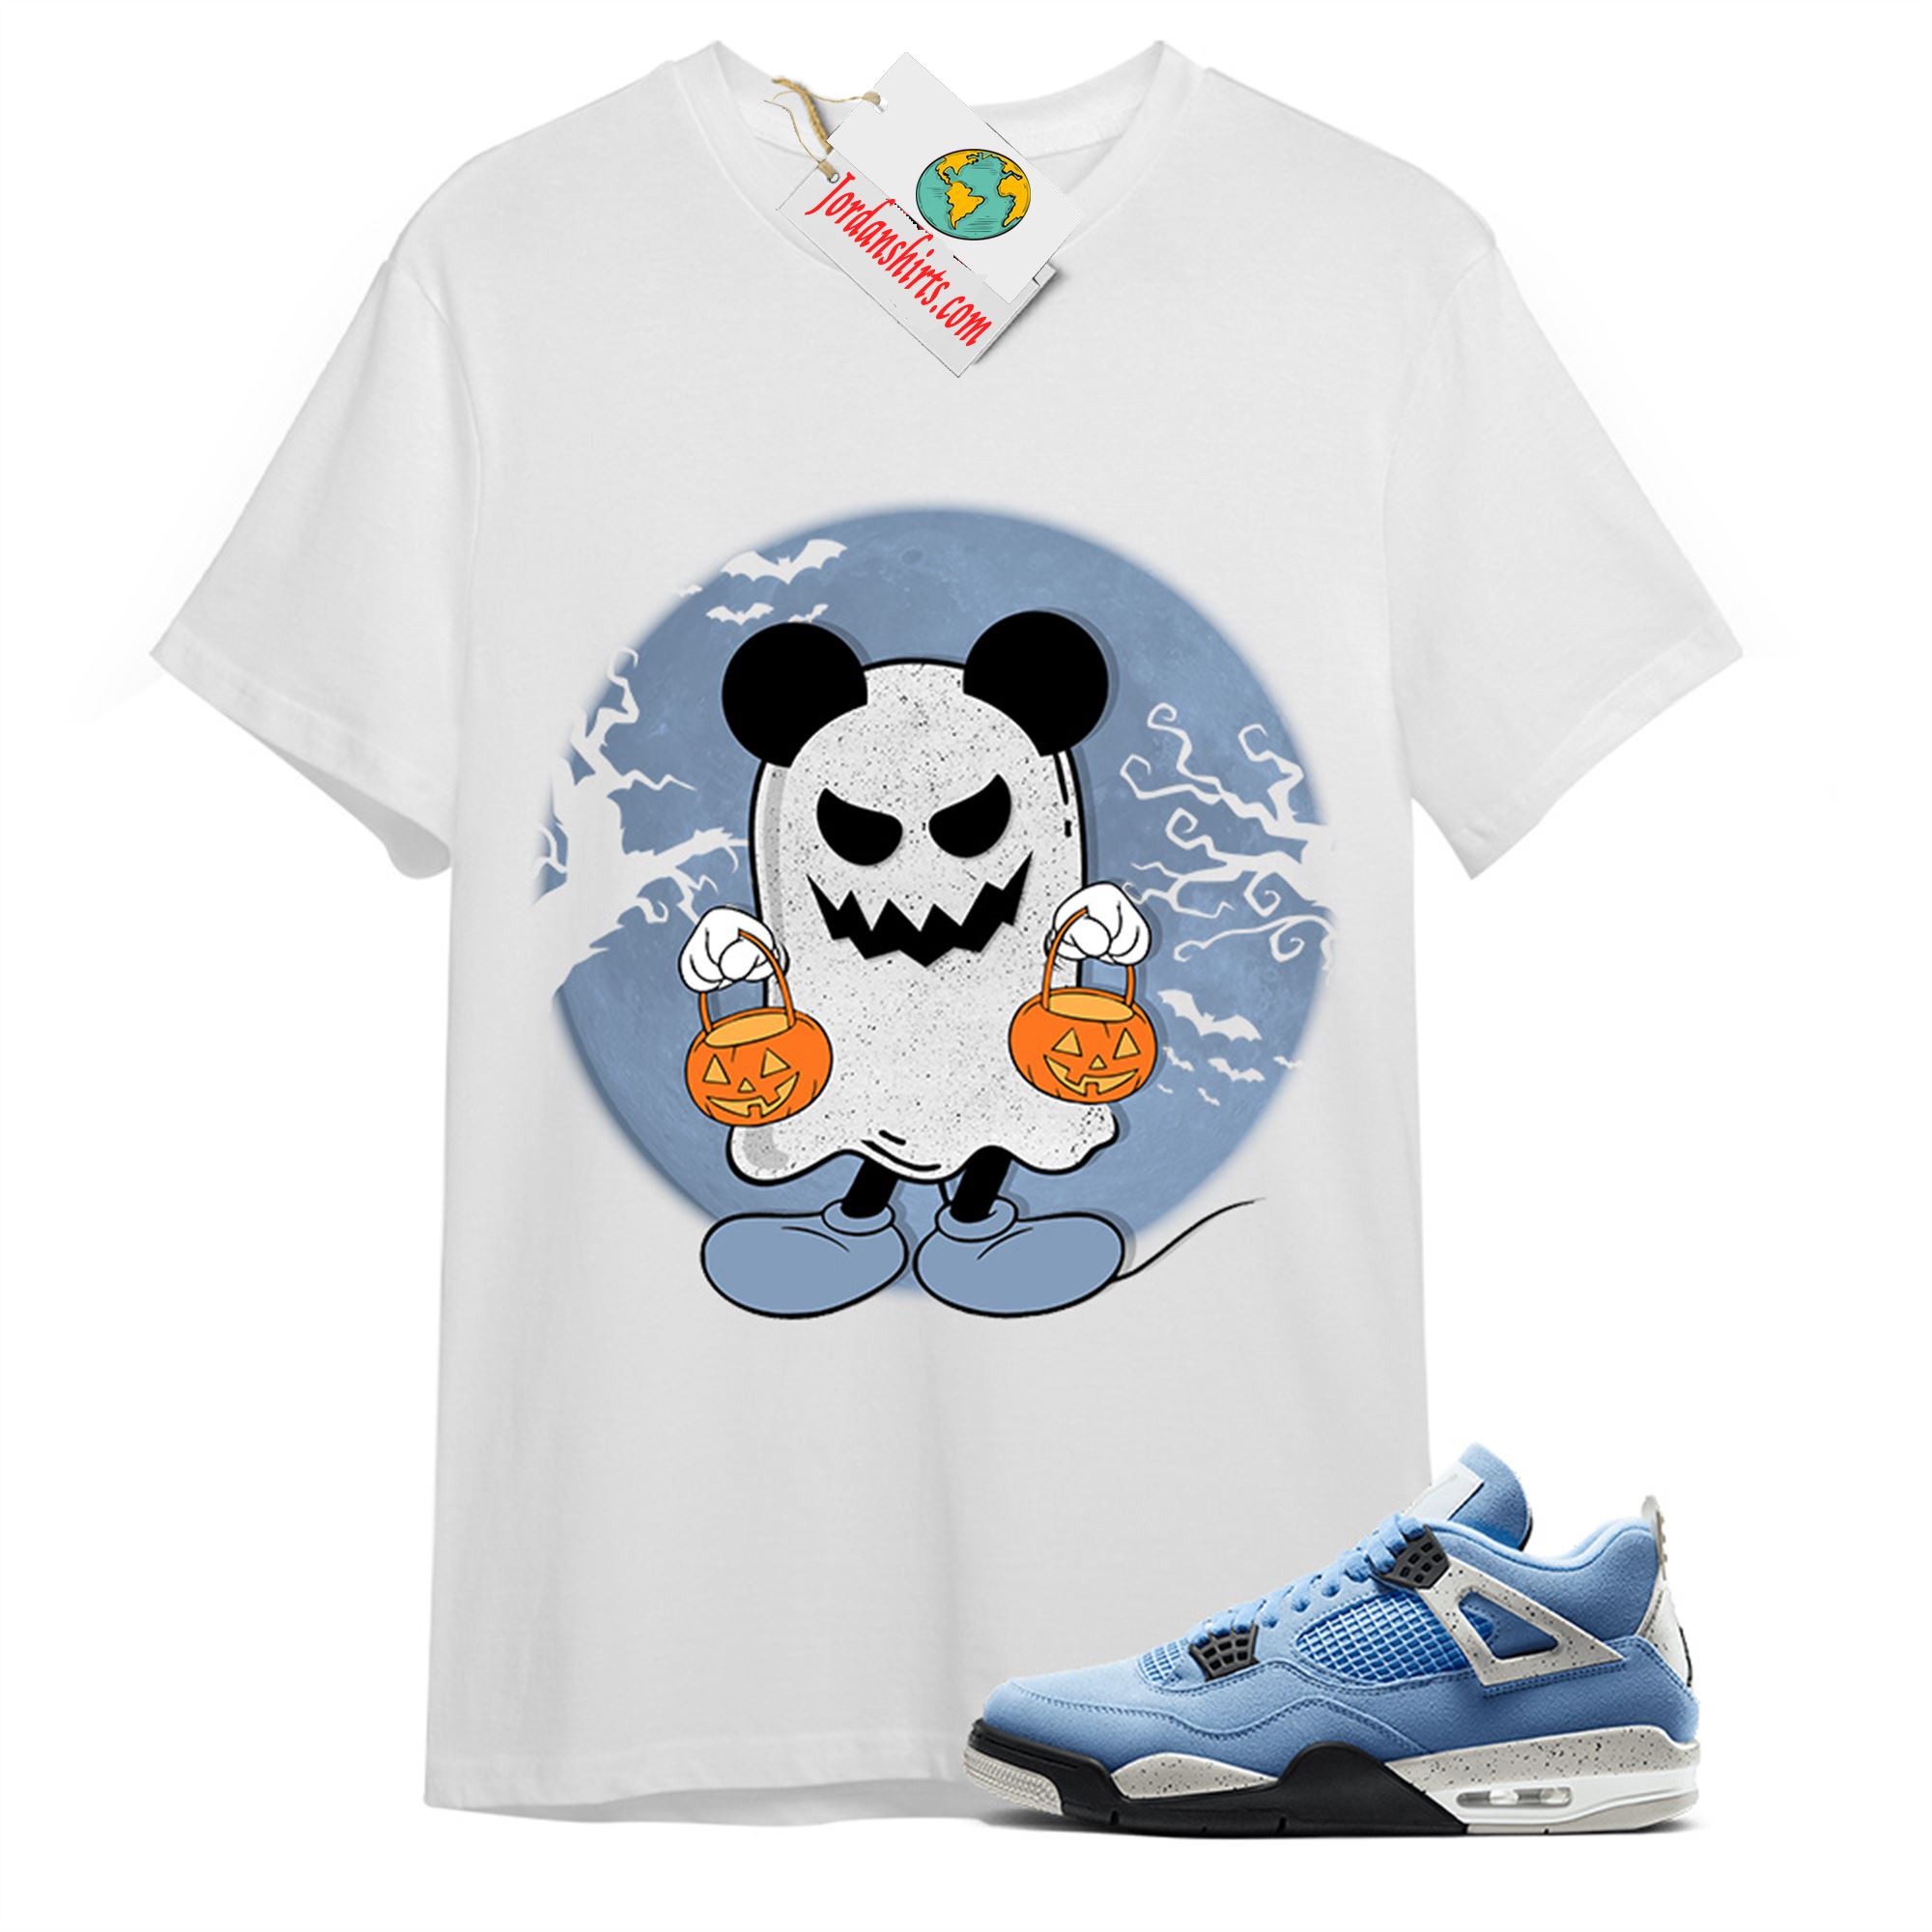 Jordan 4 Shirt, Halloween Mickey Ghost White T-shirt Air Jordan 4 University Blue 4s Size Up To 5xl